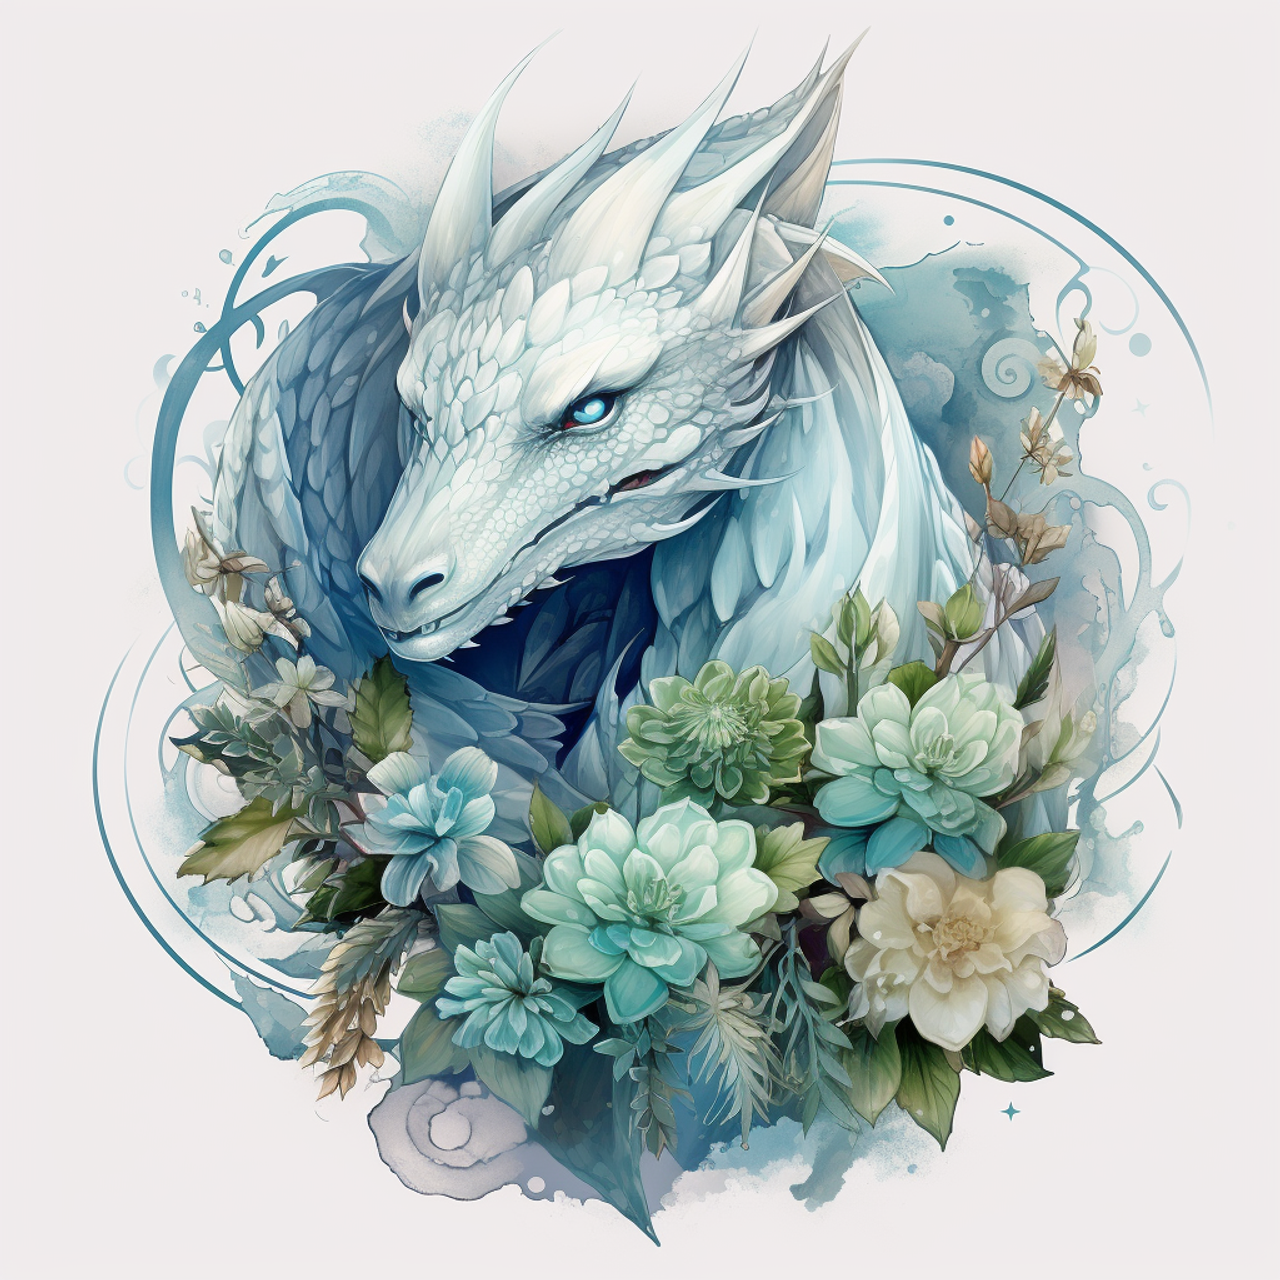 5D Diamond Painting Flowers and a Blue Dragon Head Kit - Bonanza